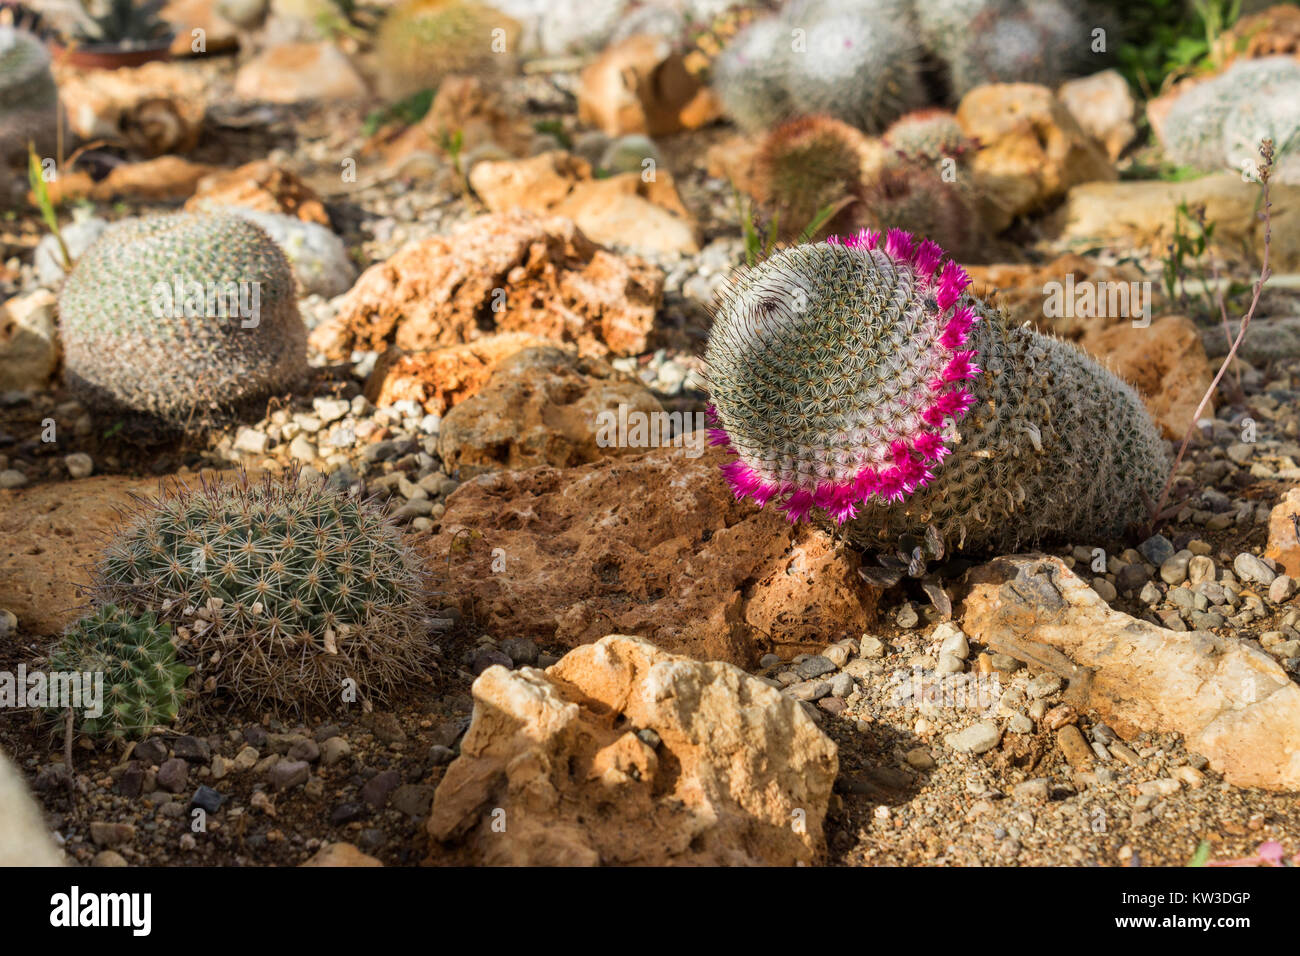 Varie cactus piantato nel terreno, close up shot Foto Stock